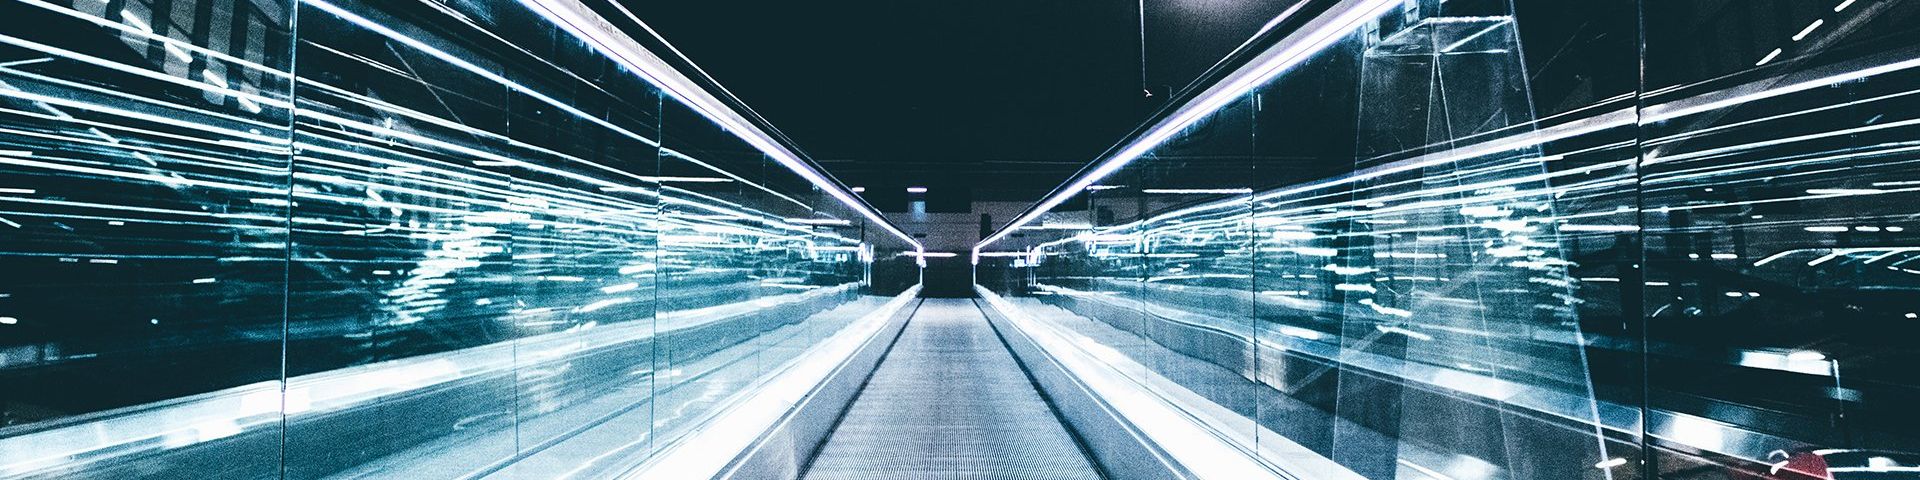 Grey conveyor between glass frames at night